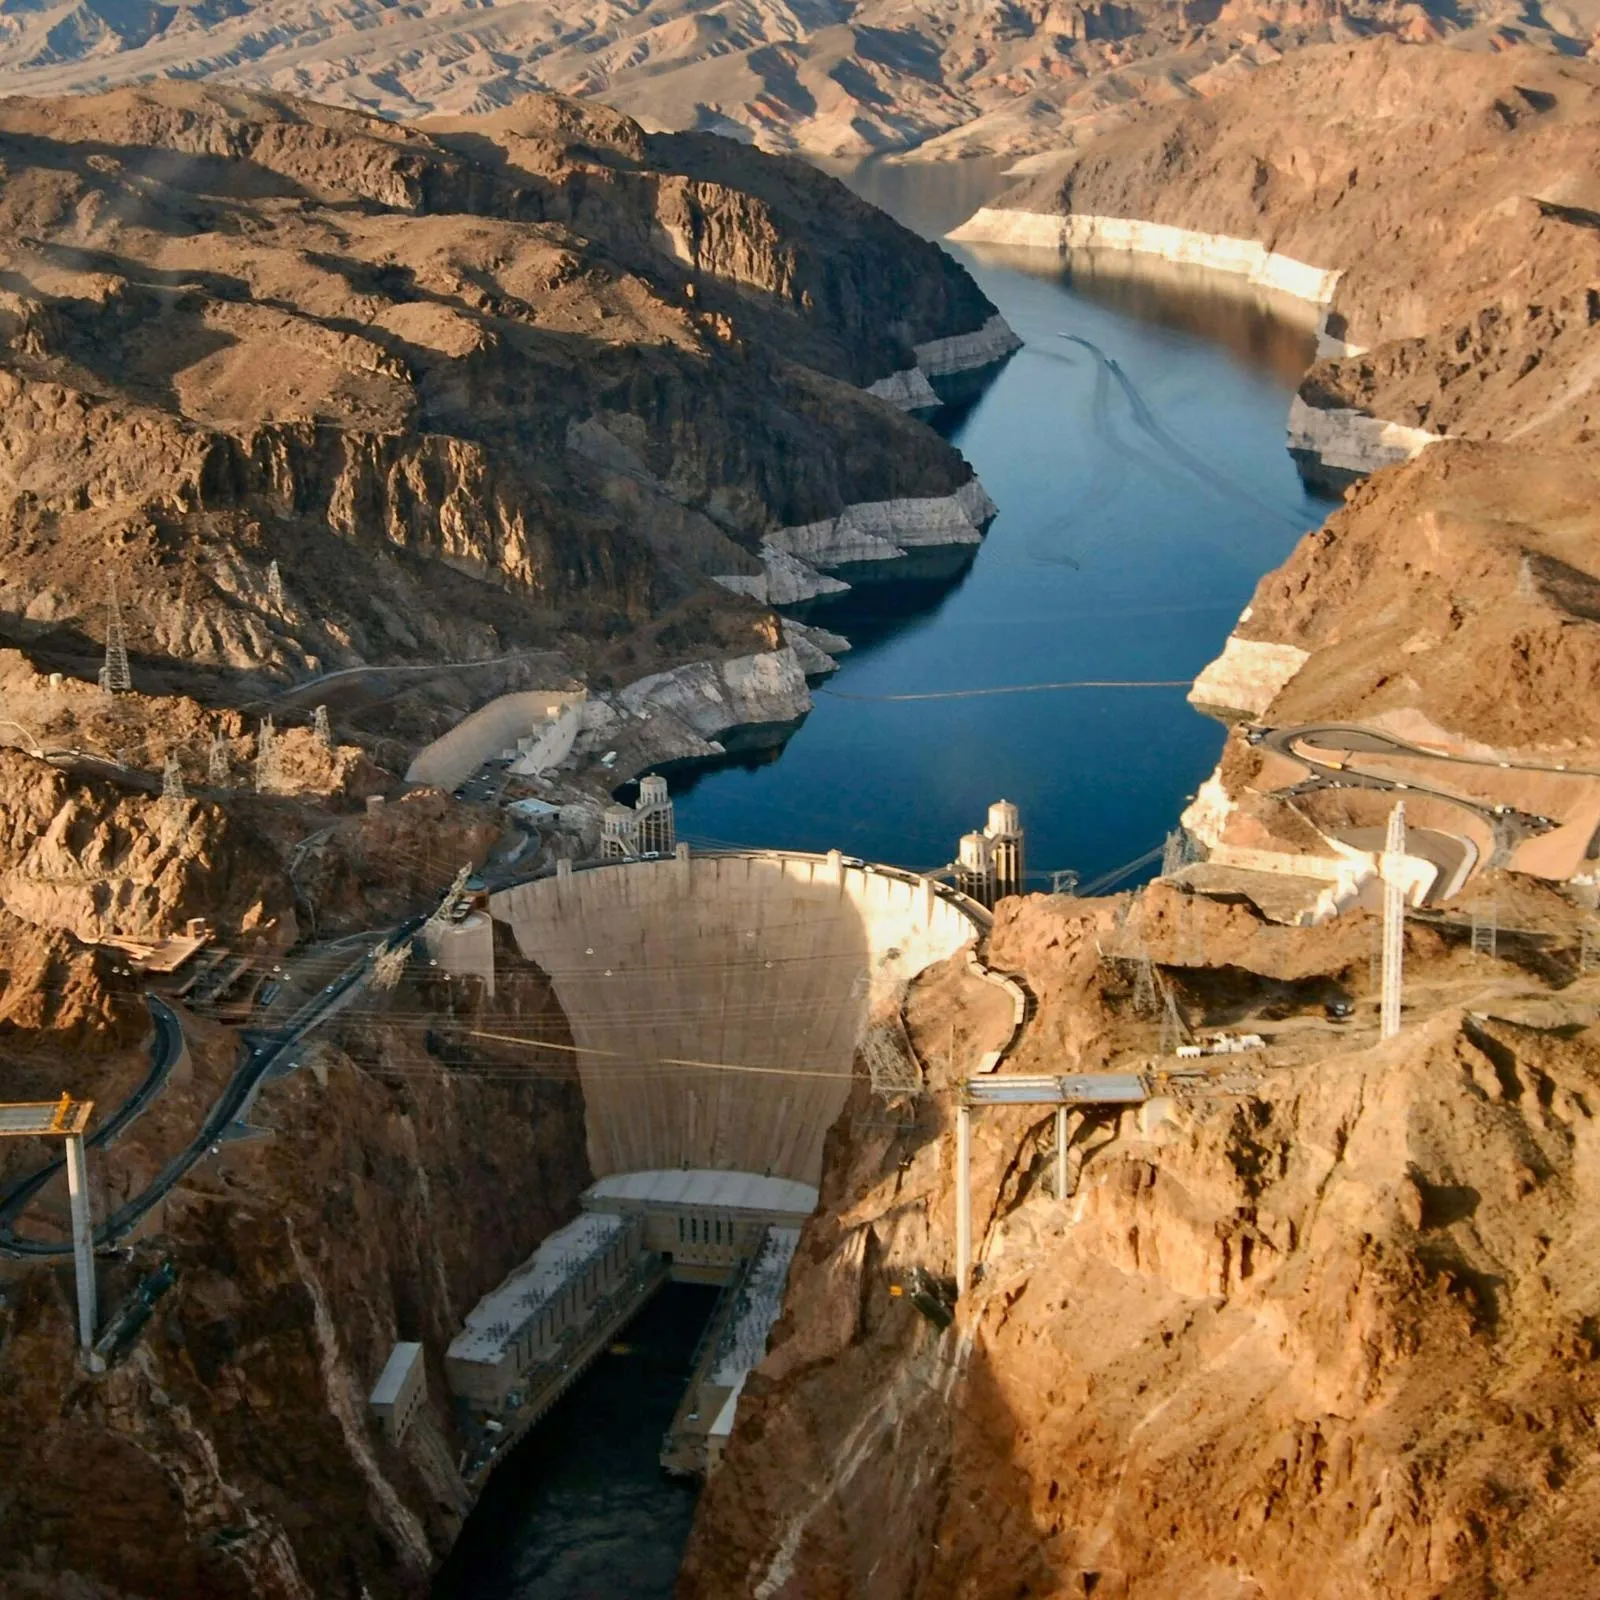 Water-reducing Admixtures at Hoover Dam